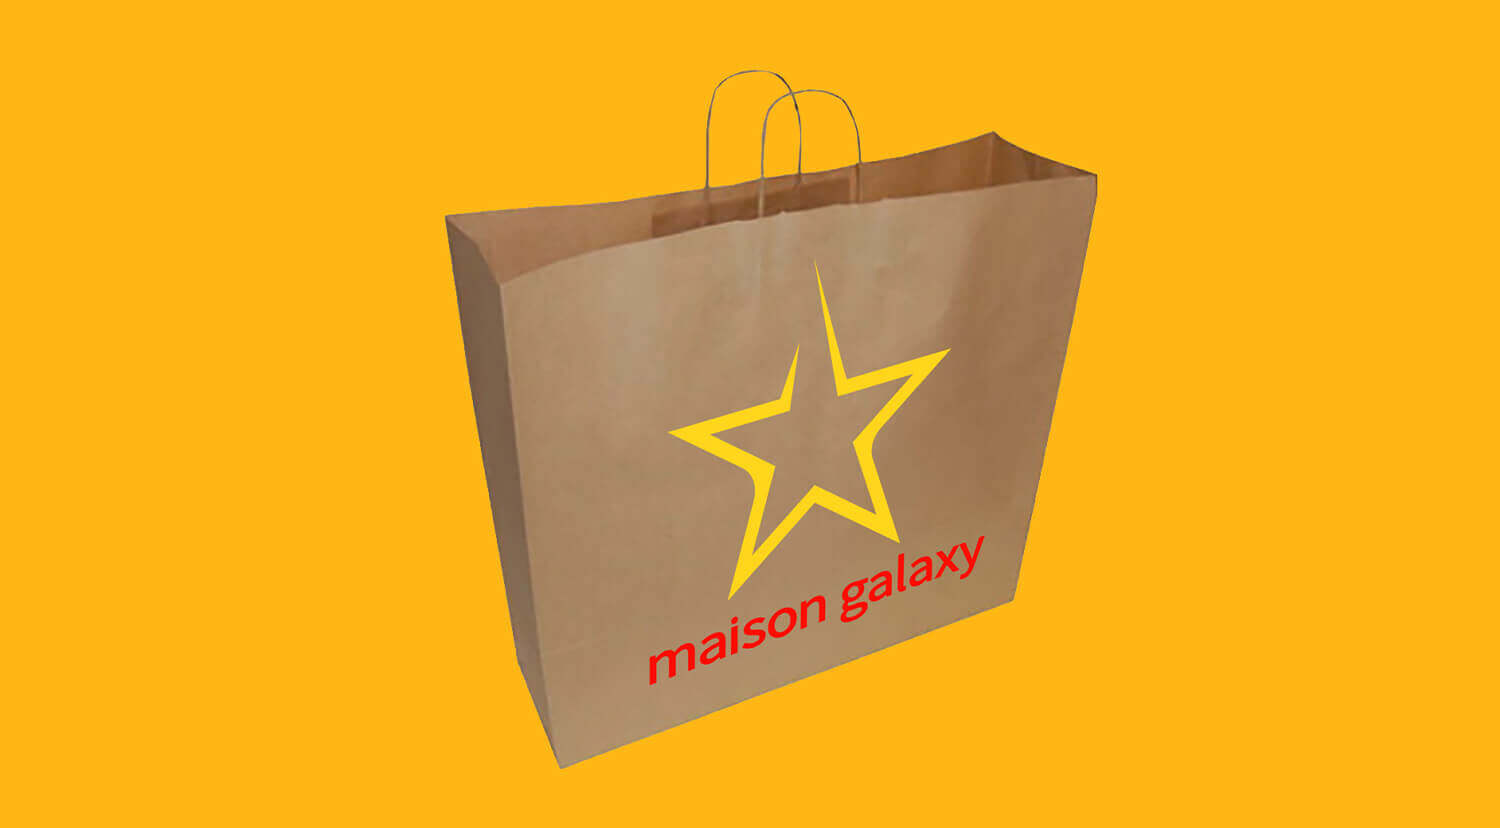 Maison Galaxy, Retail Shopping Bag Branding, Interior Design, Supermarket, Fashion, General Retail, Graphic Communications Branding - Campbell Rigg Agency